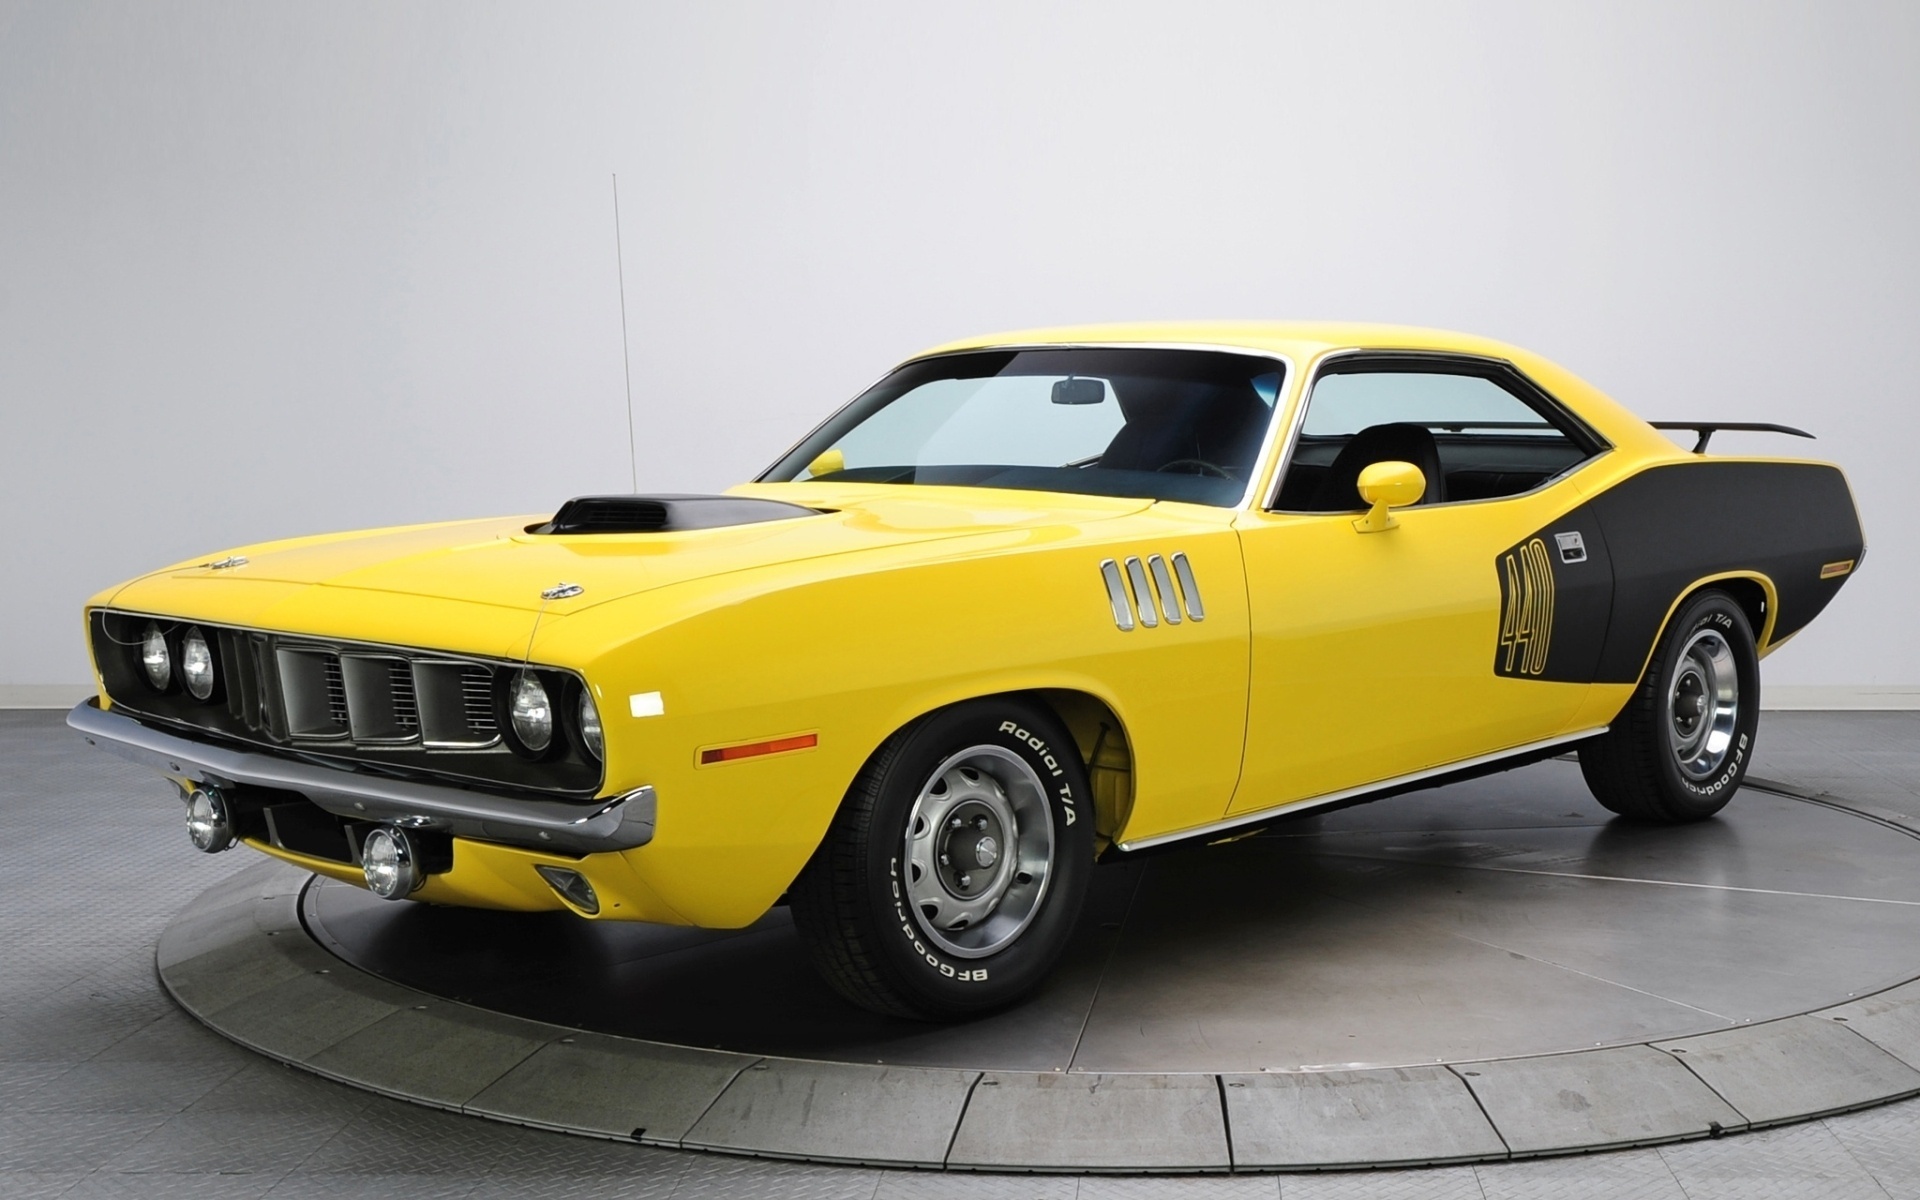 1971, , , muscle car, , cuda, 440, Plymouth, 